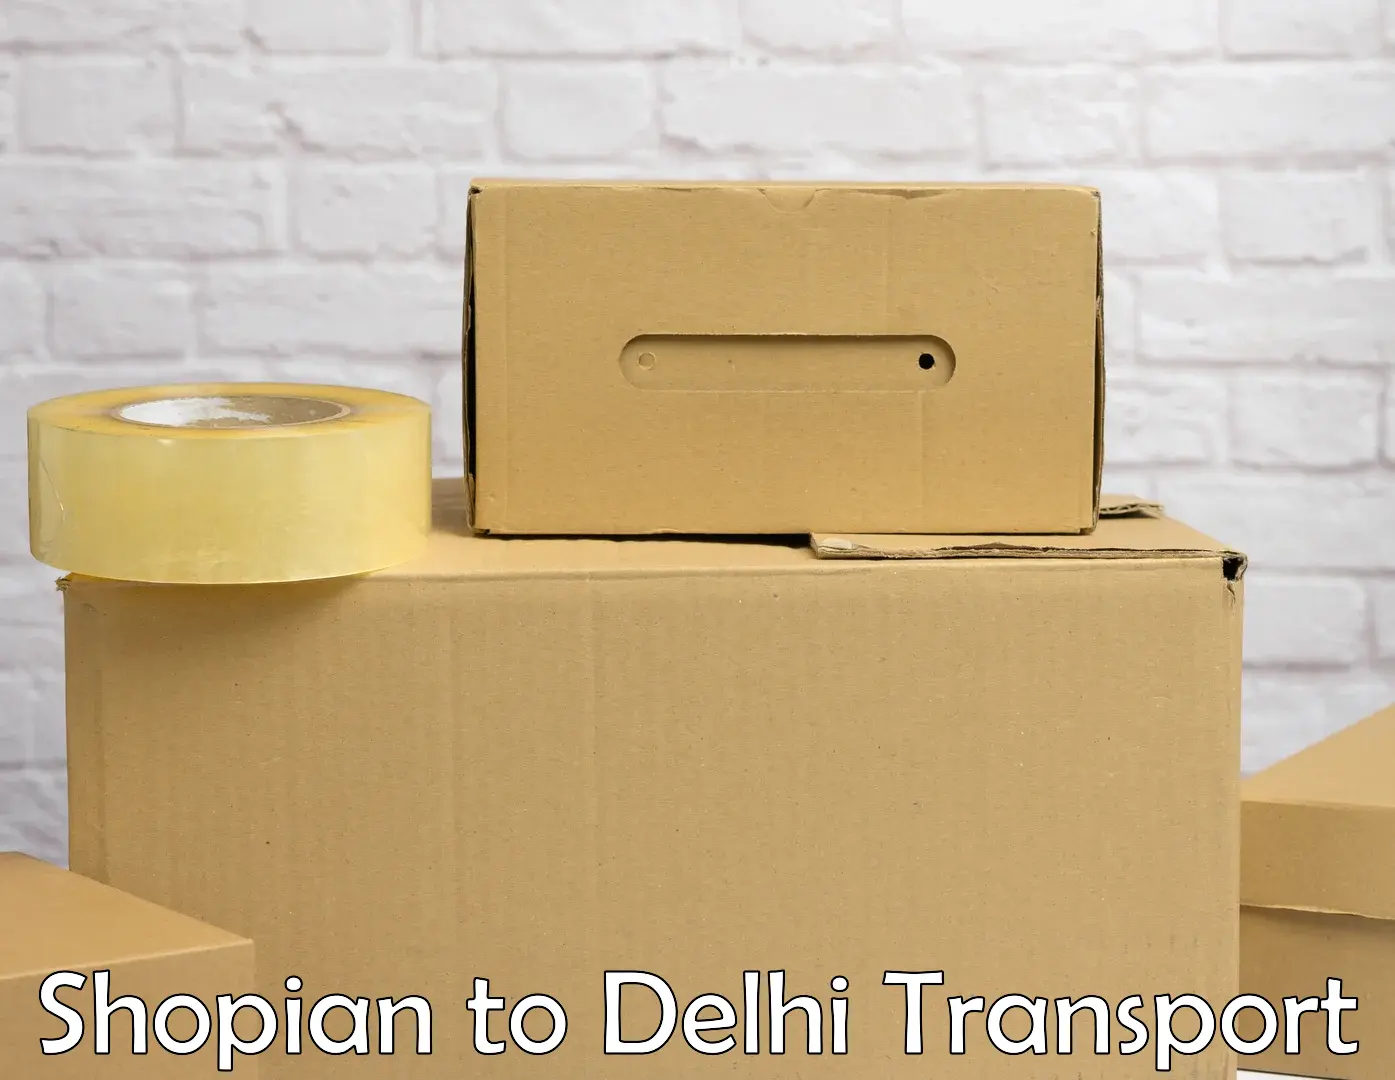 Air cargo transport services Shopian to Delhi